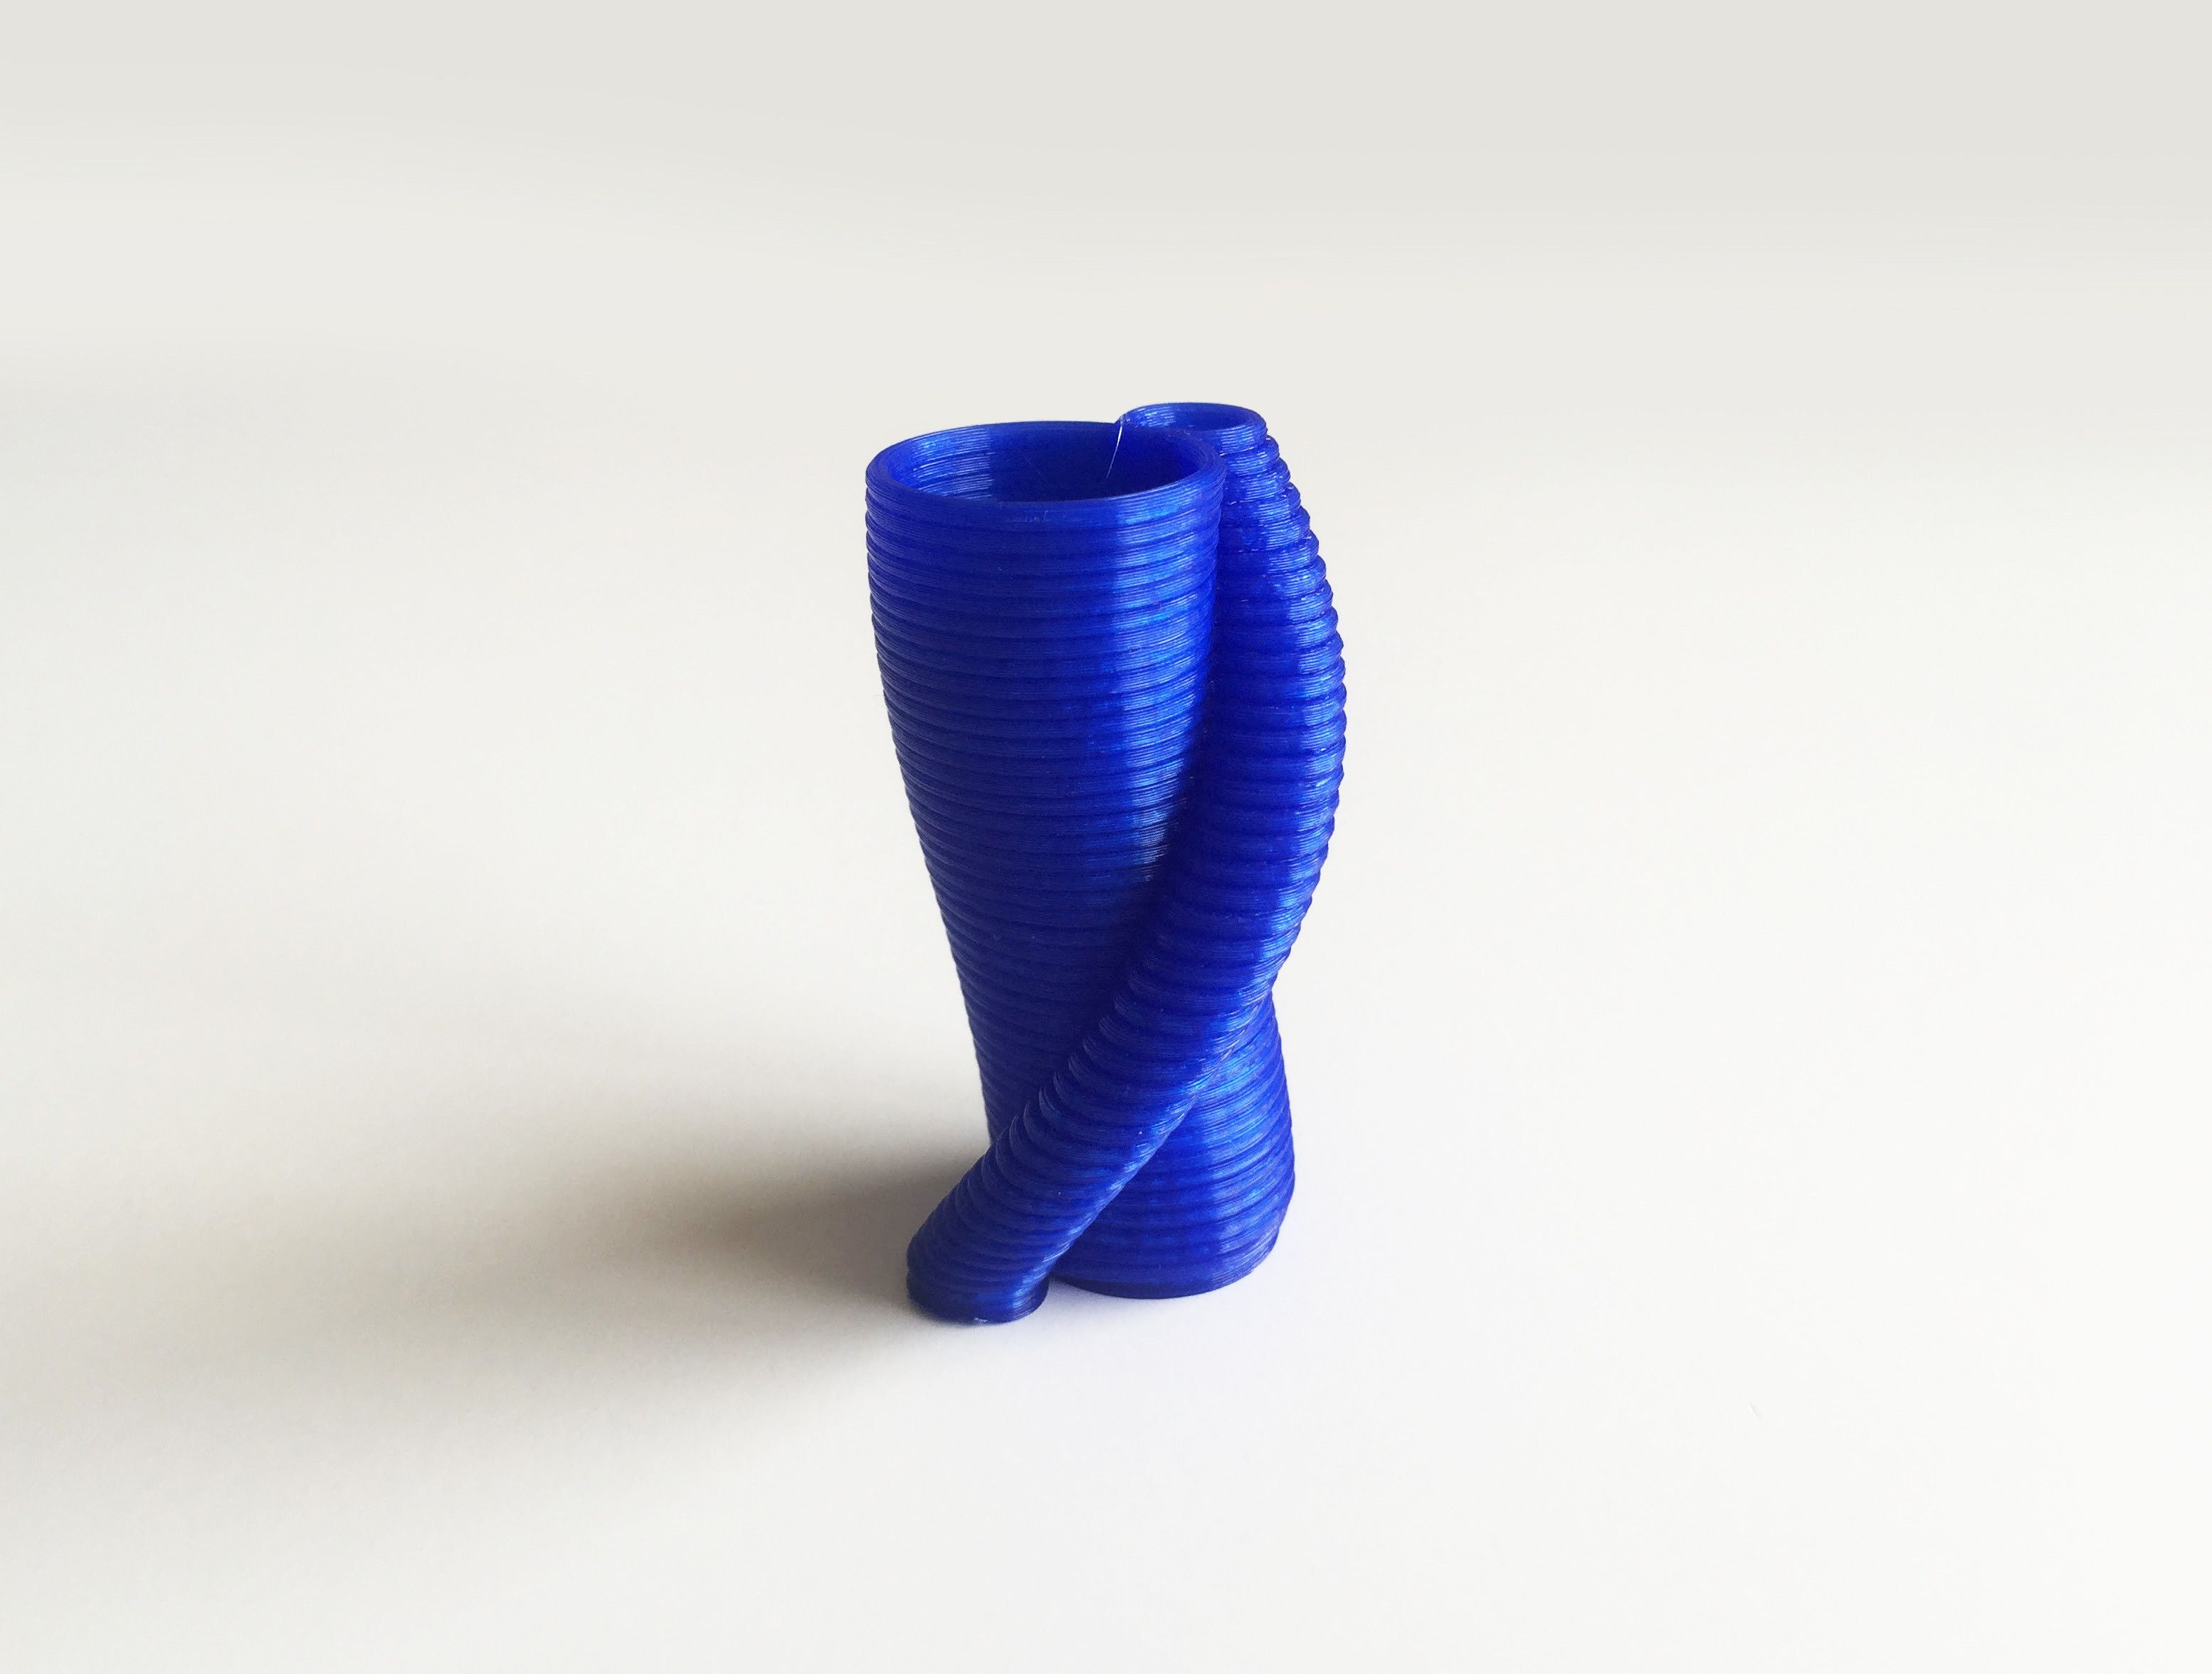 IMG_2111.JPG Download free STL file Arrayed Tube Vase # 1 • 3D printer template, David_Mussaffi